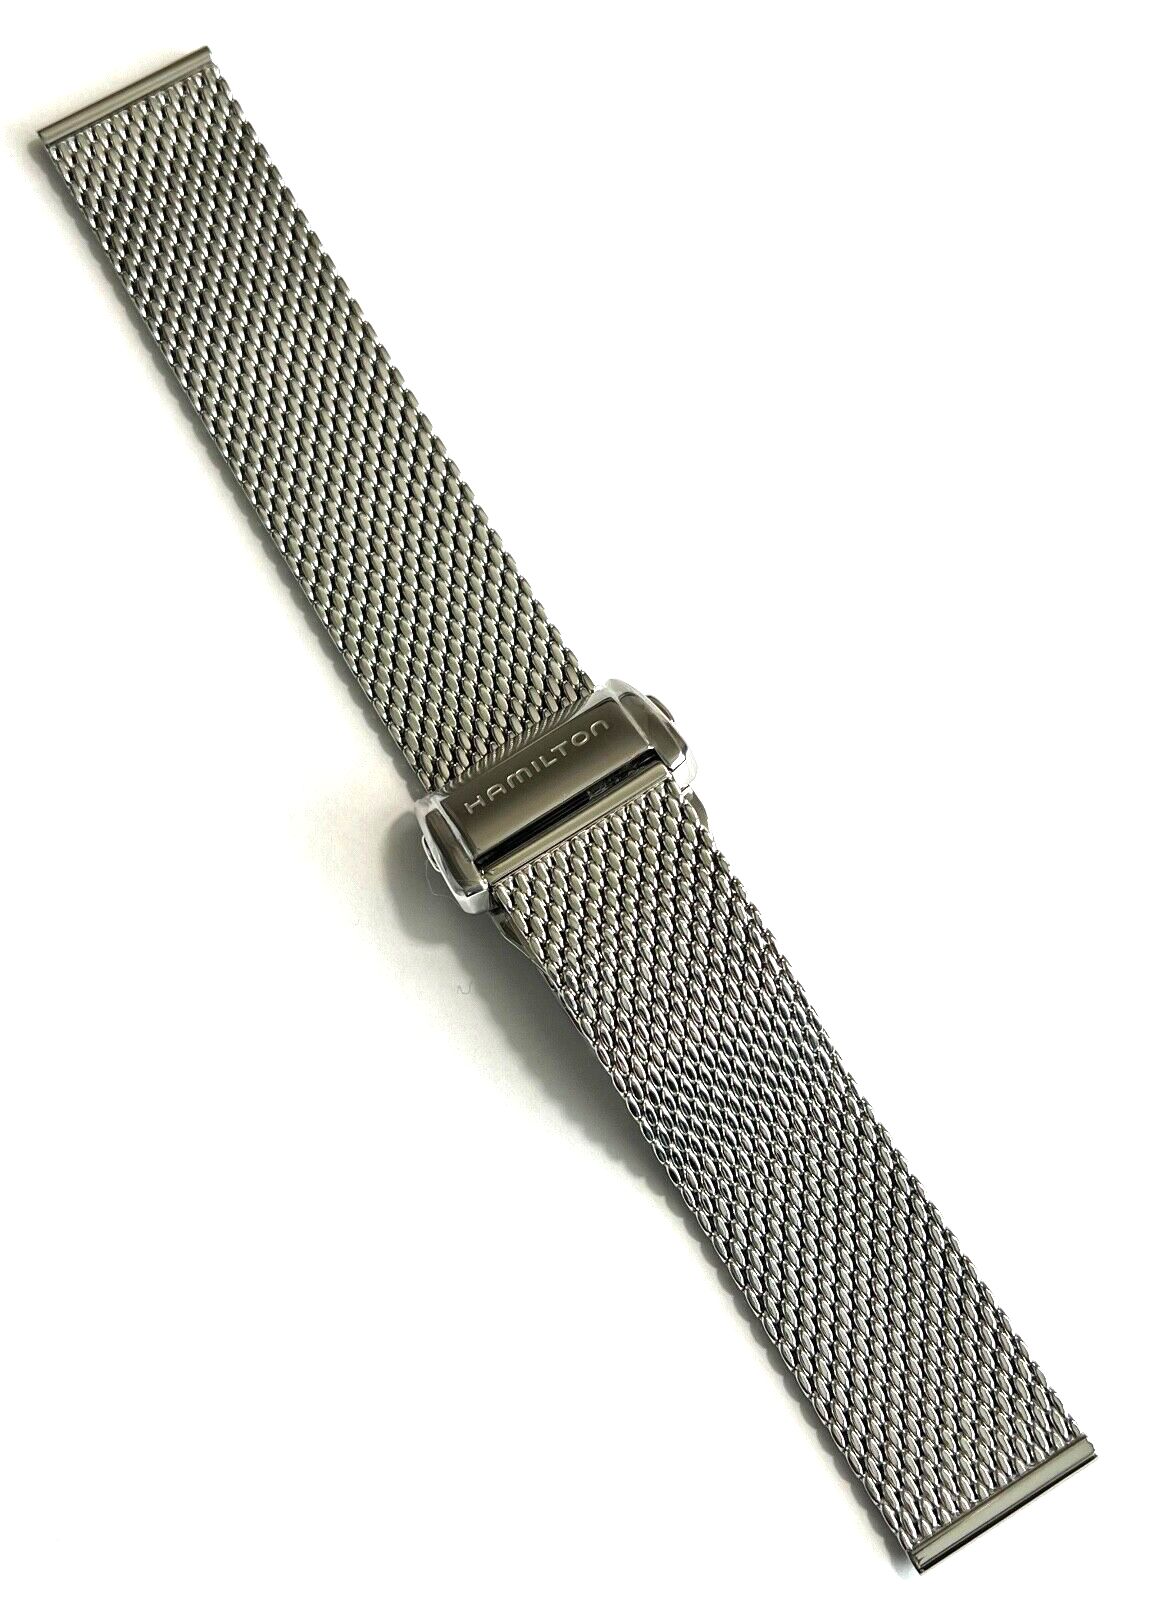 cijfer litteken Discreet Original Hamilton 20mm H384160, H384250, H384290 Mesh Metal Watch Band  Bracelet | eBay